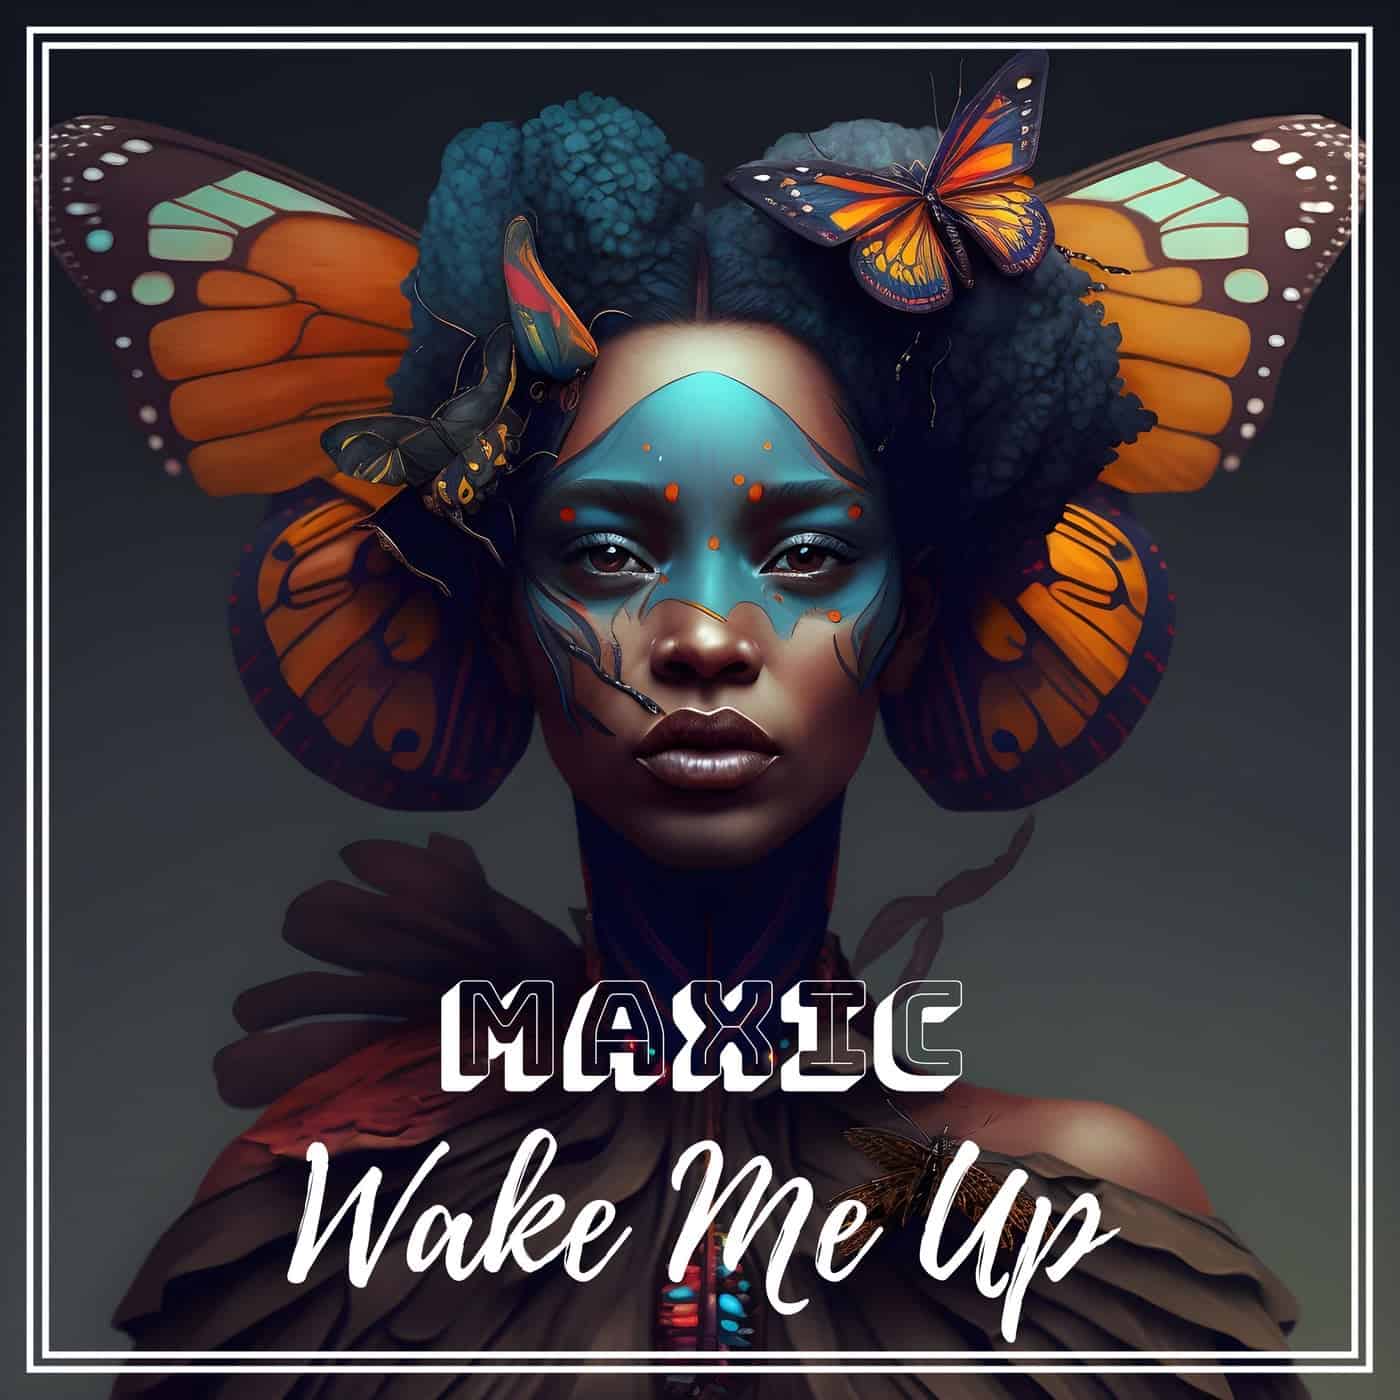 image cover: Maxic - Wake Me Up on BlackSea Records